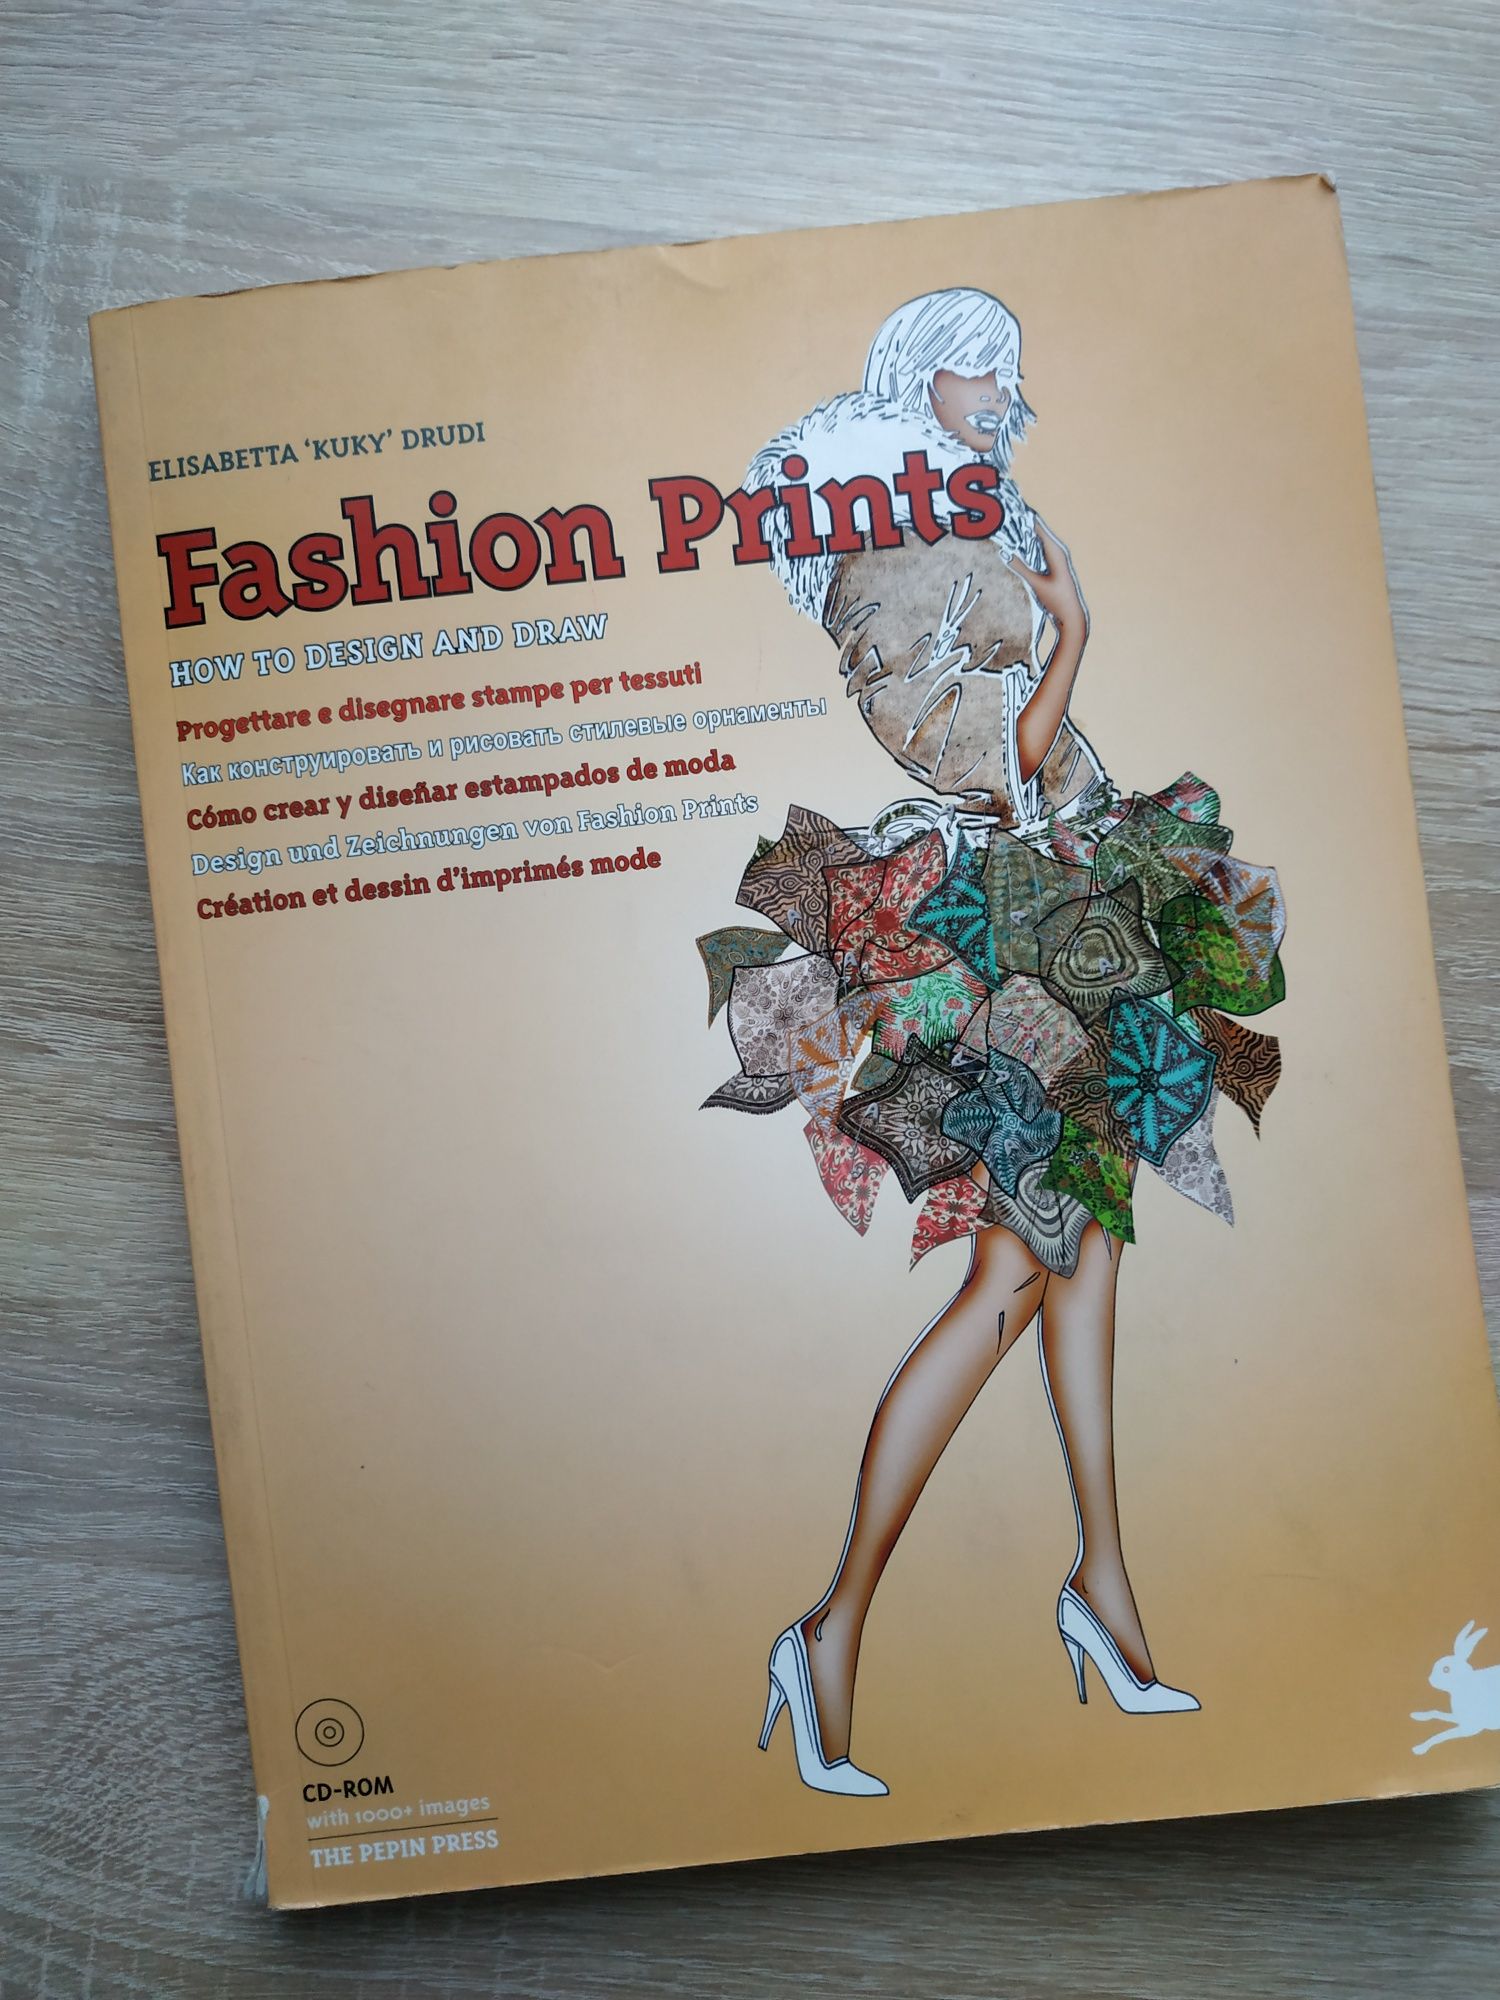 "Fashion prints" Elisabetta 'Kuky' Drudi